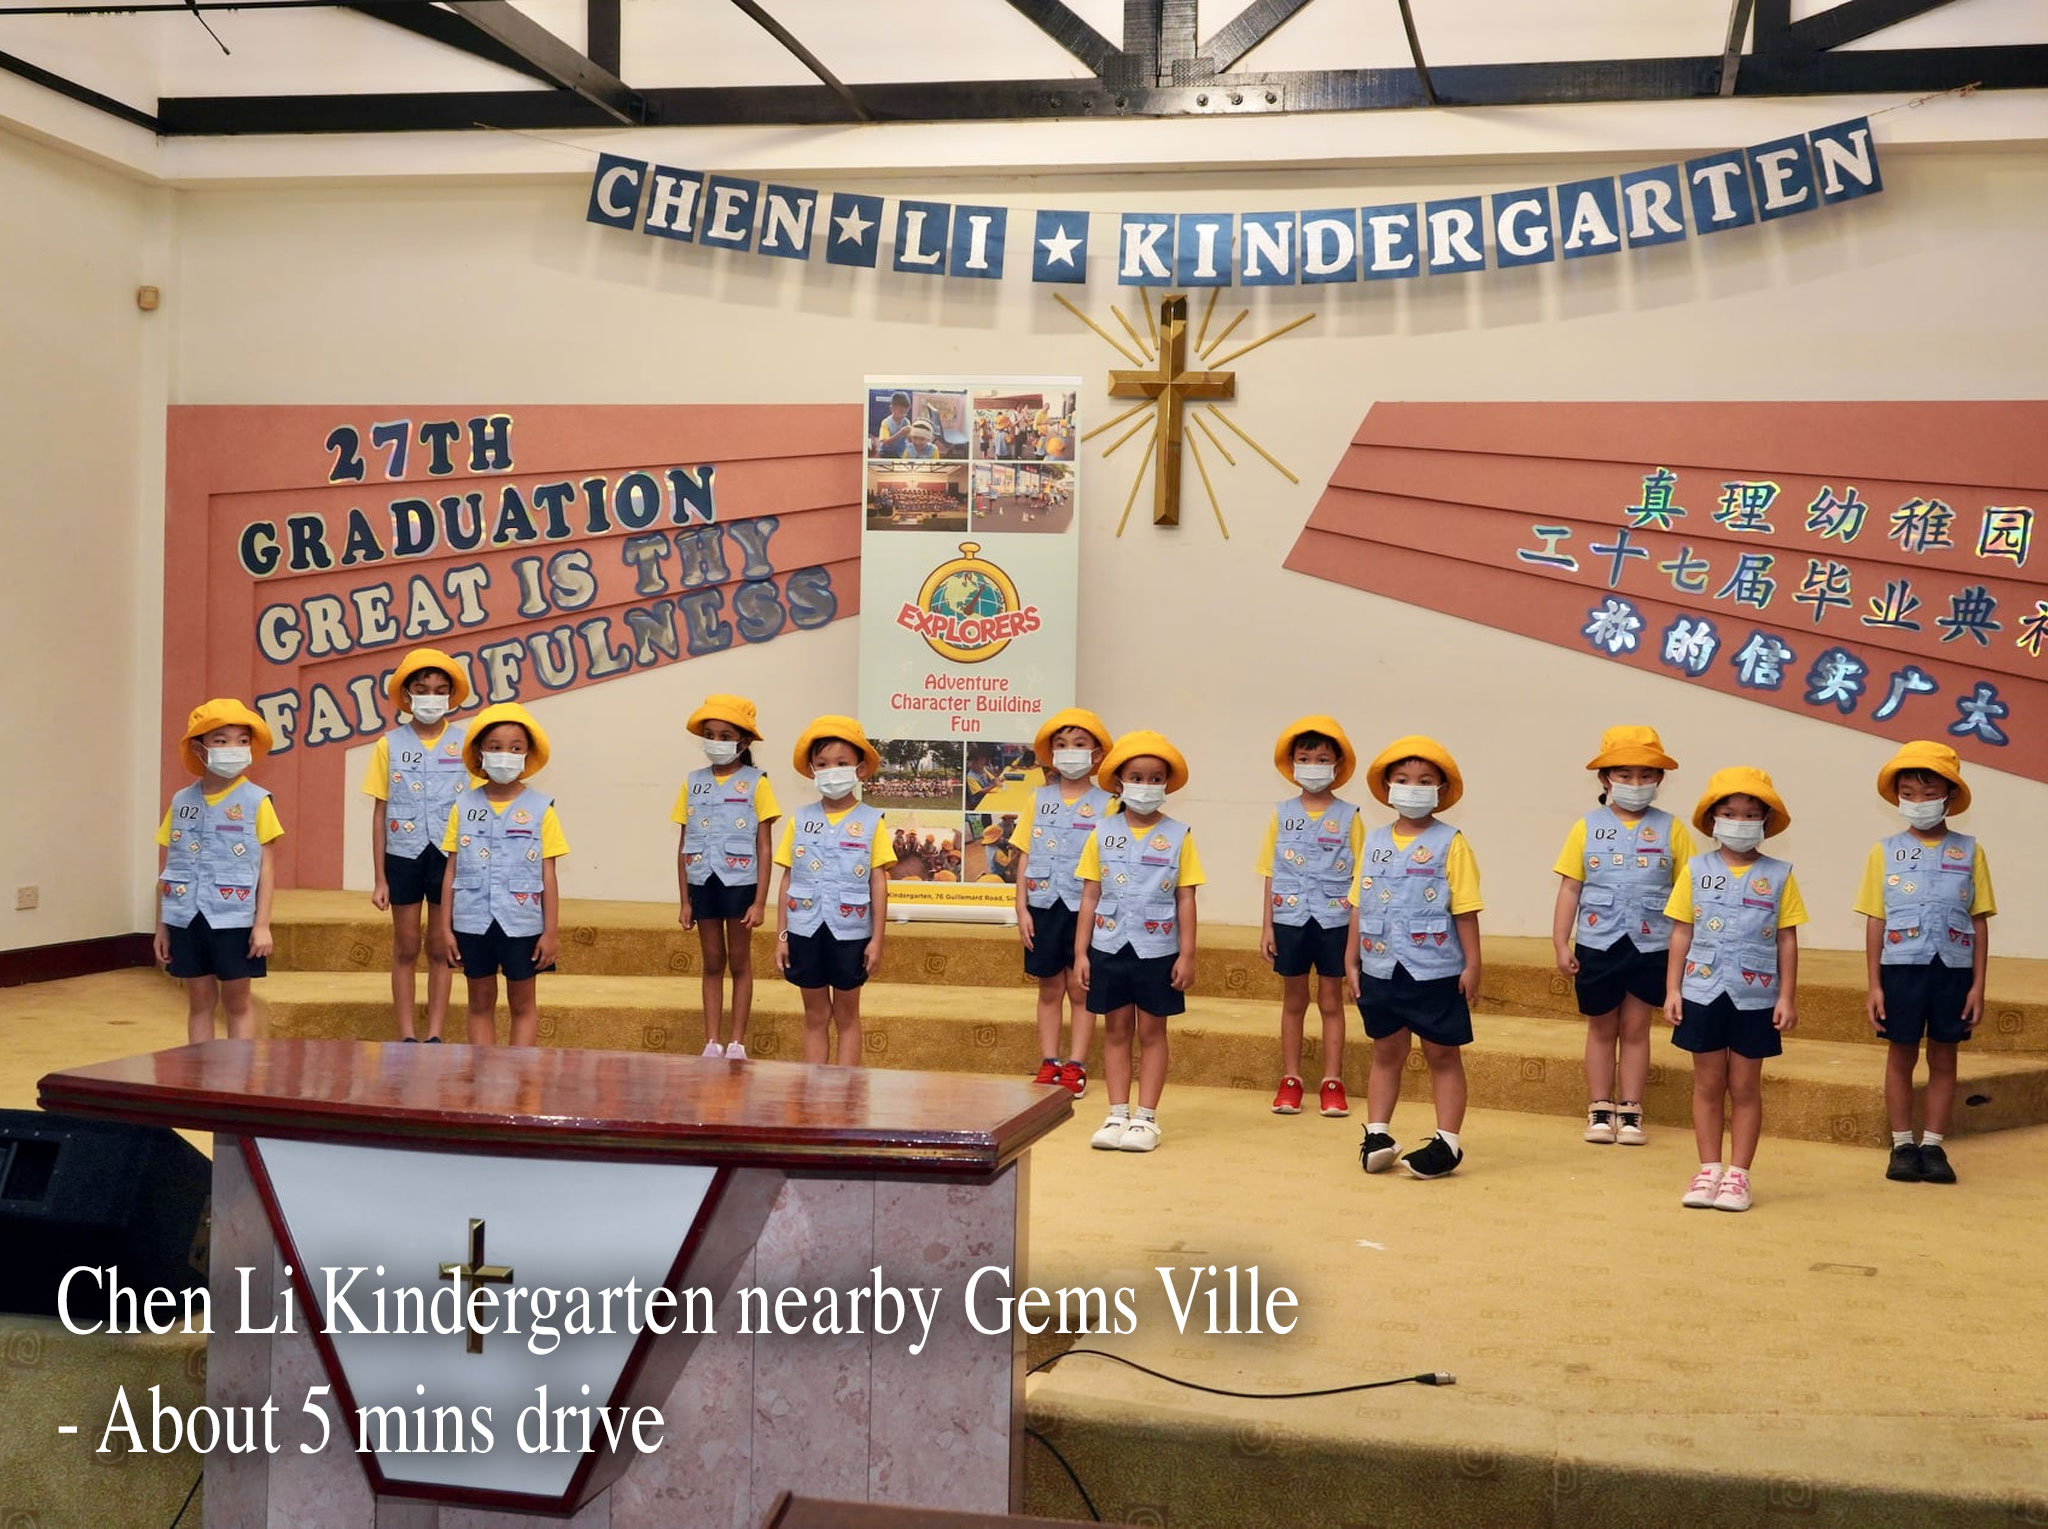 Chen Li Kindergarten nearby Gems Ville - About 5 mins drive